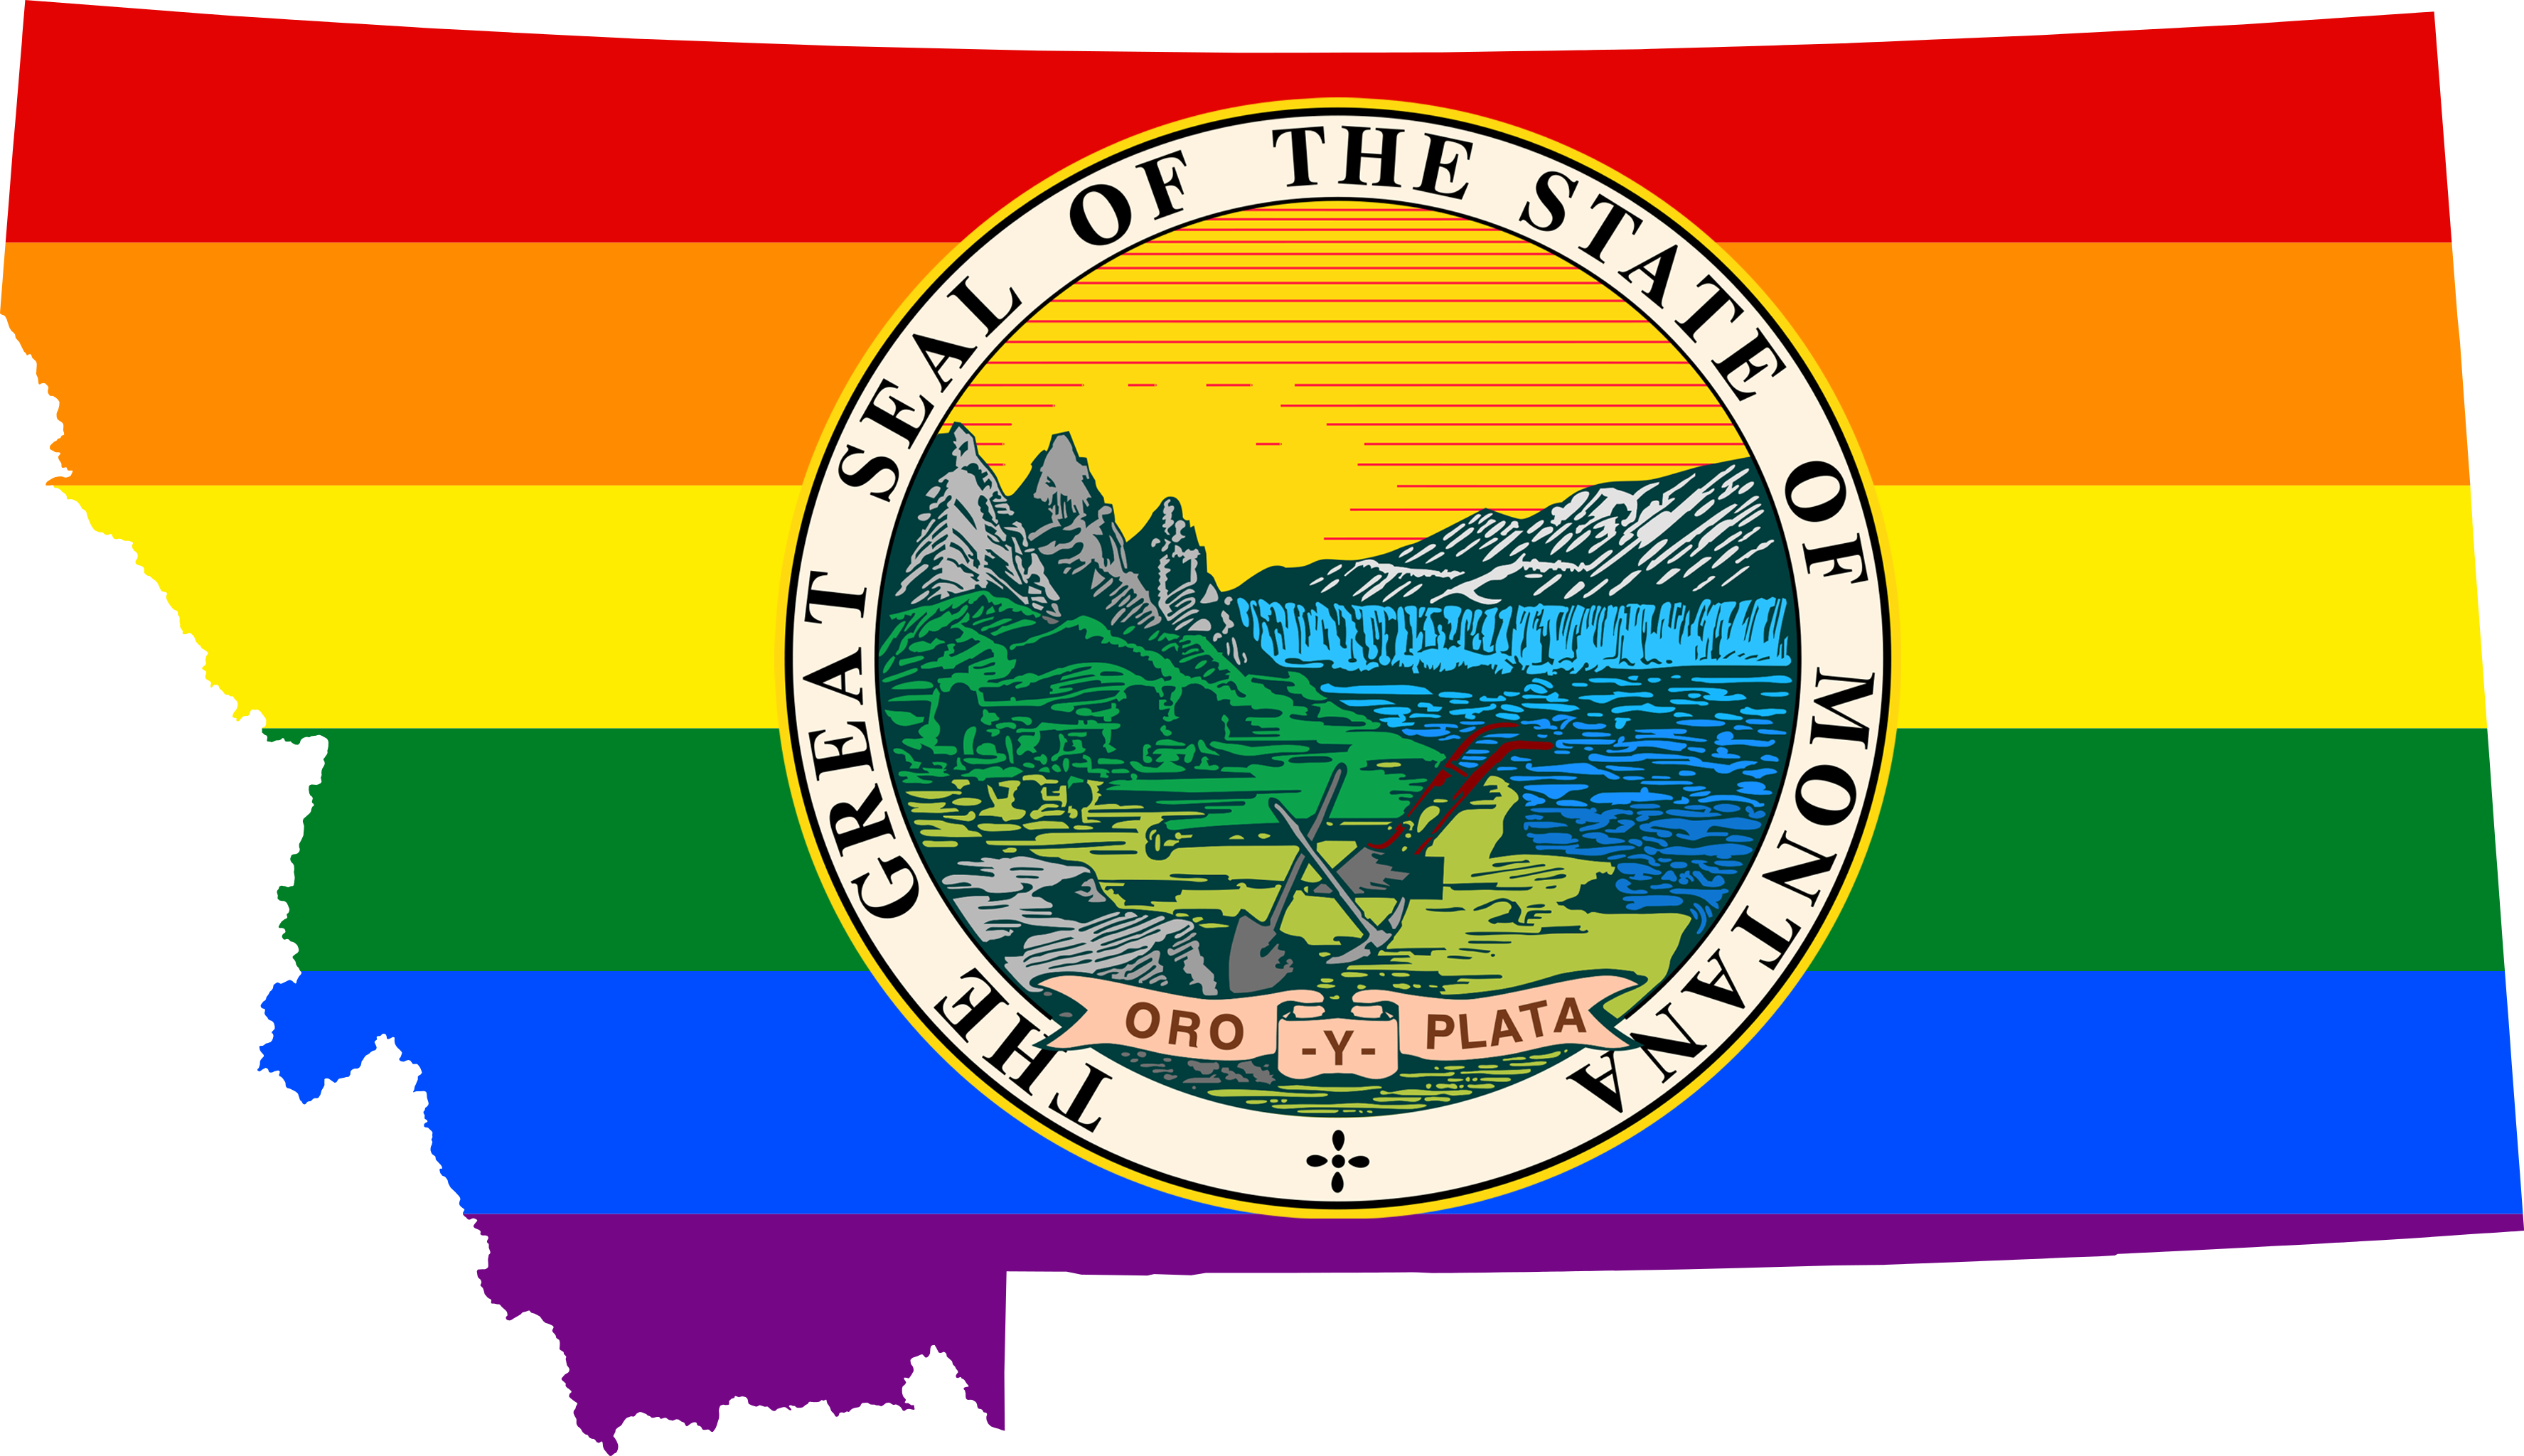 Montana LGBTQ